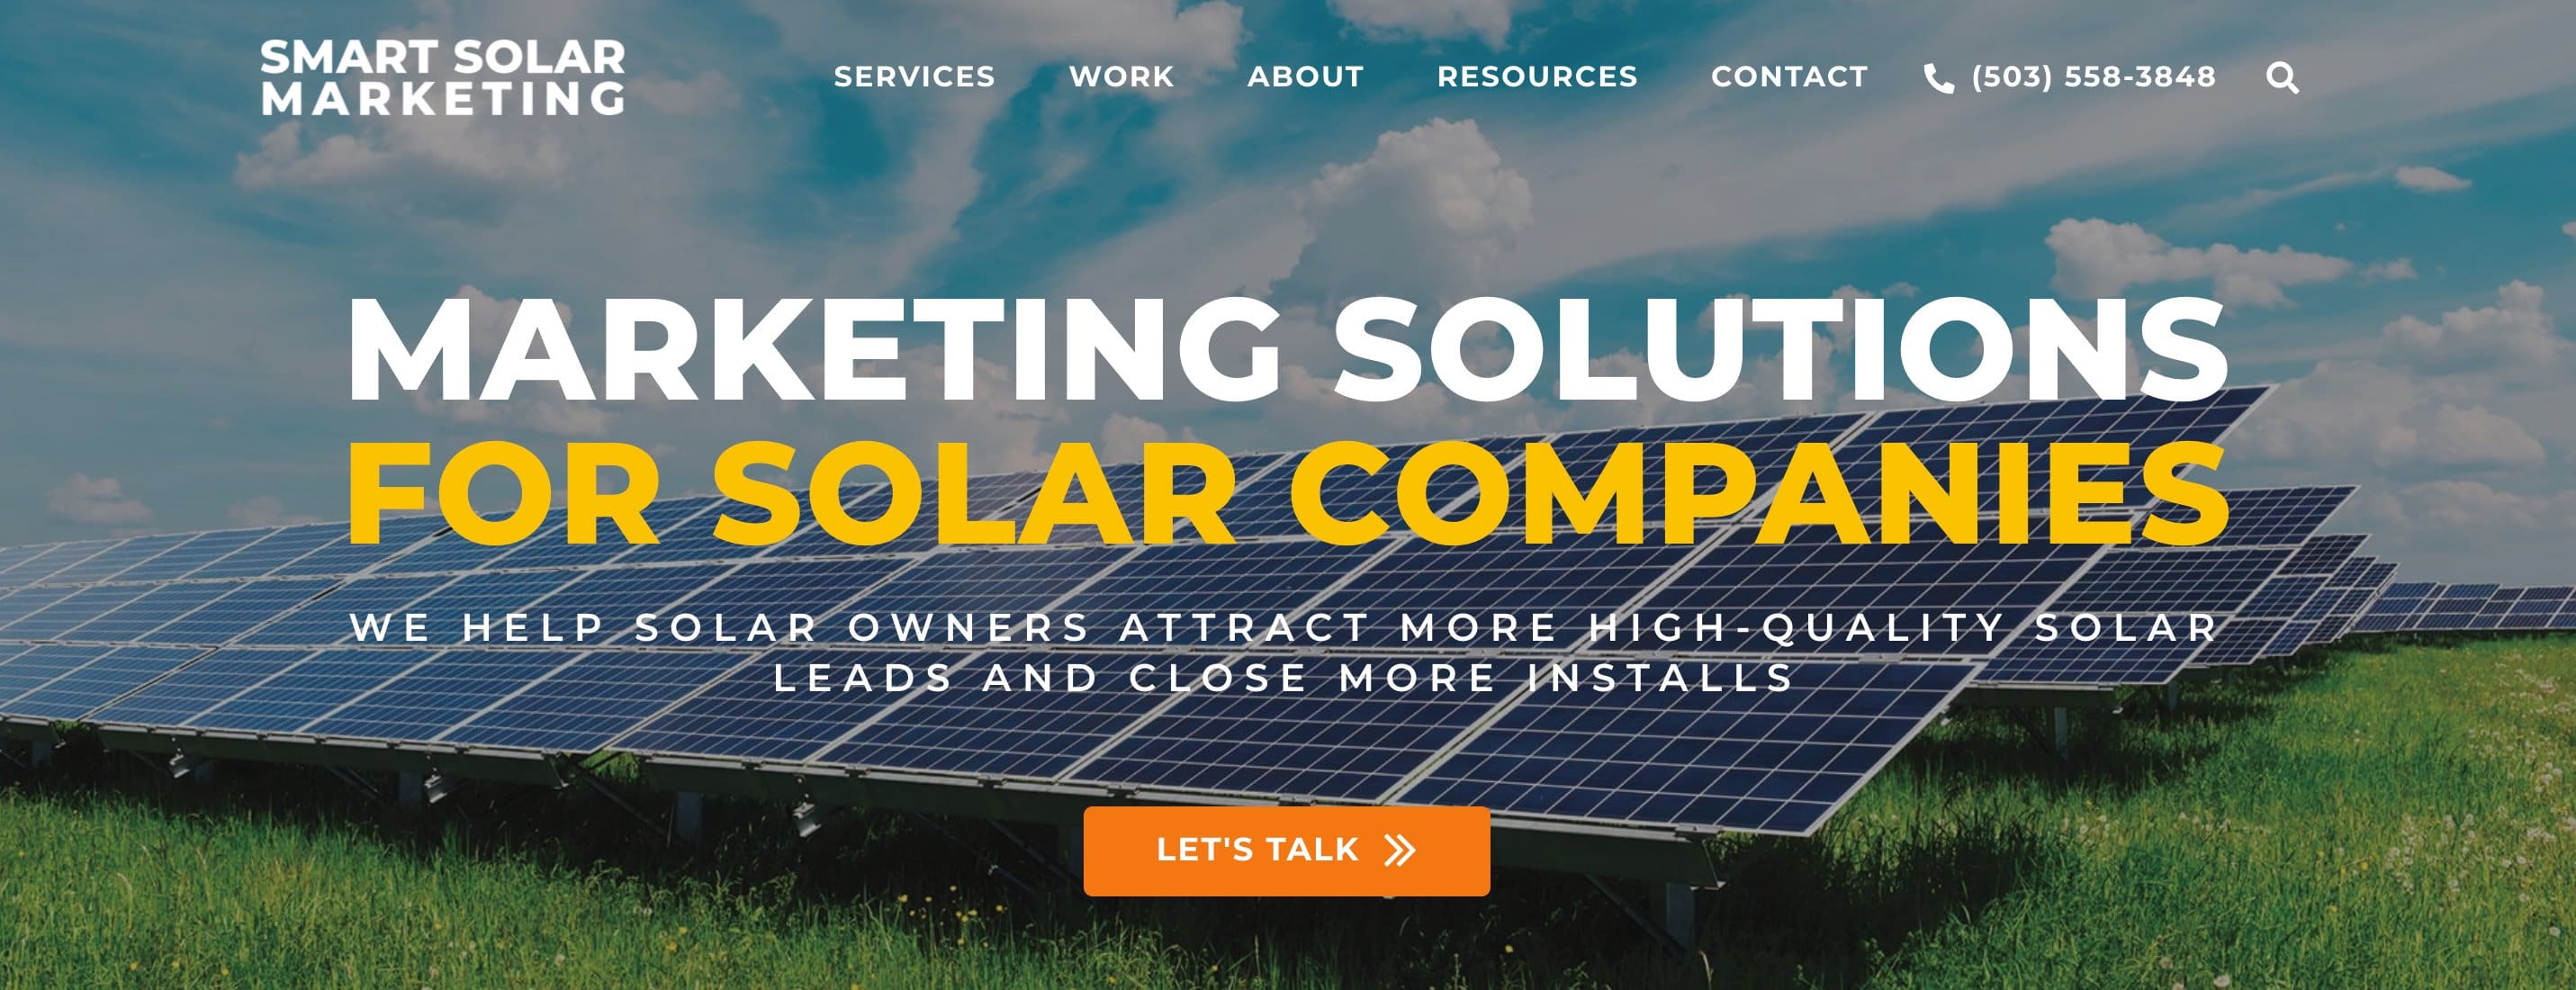 Smart Solar Marketing - Seaside, OR, US, google campaign management